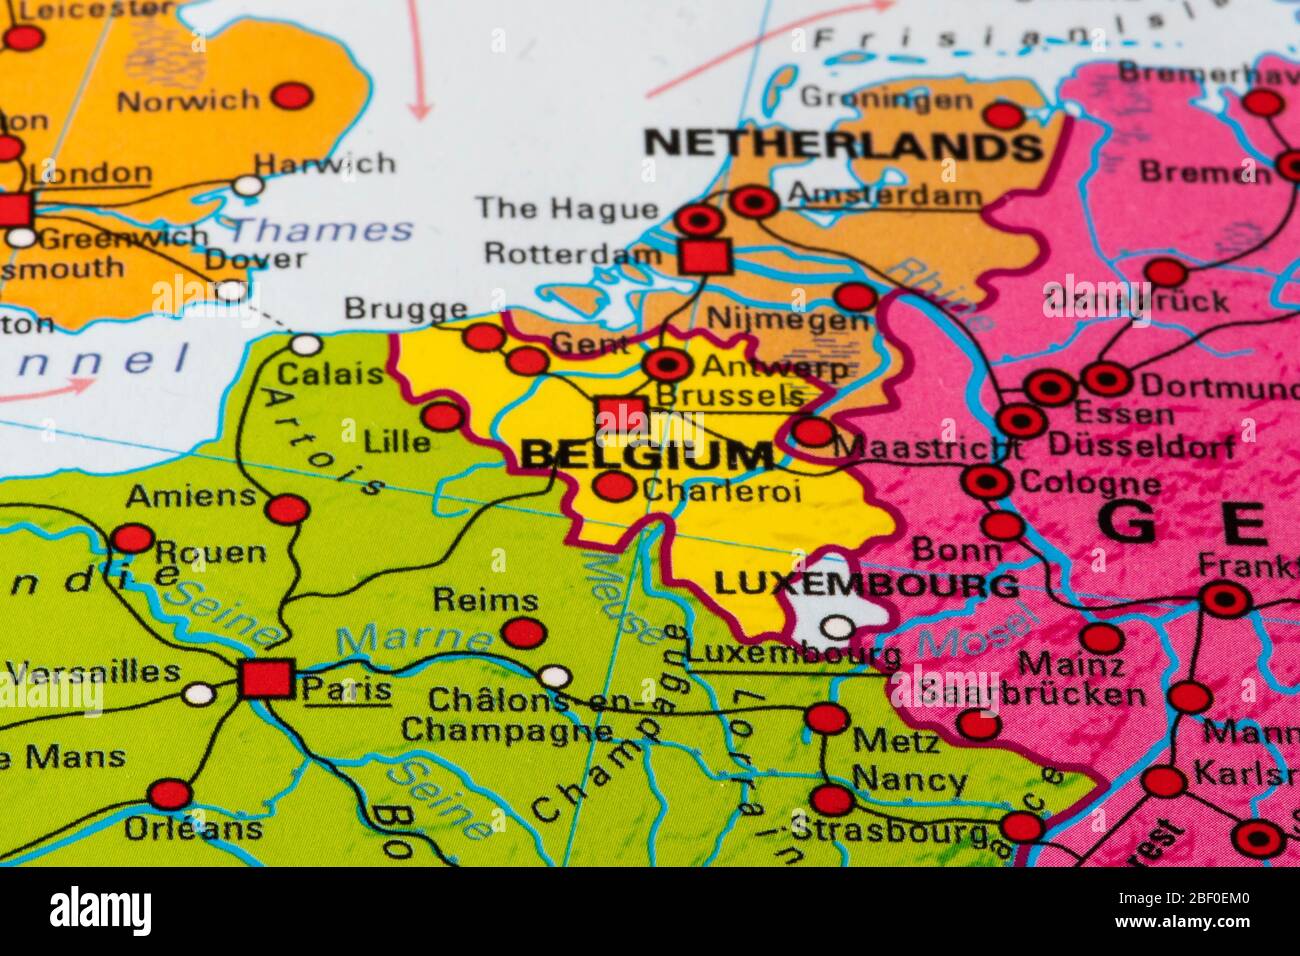 Europe Map Of Belgium 2BF0EM0 